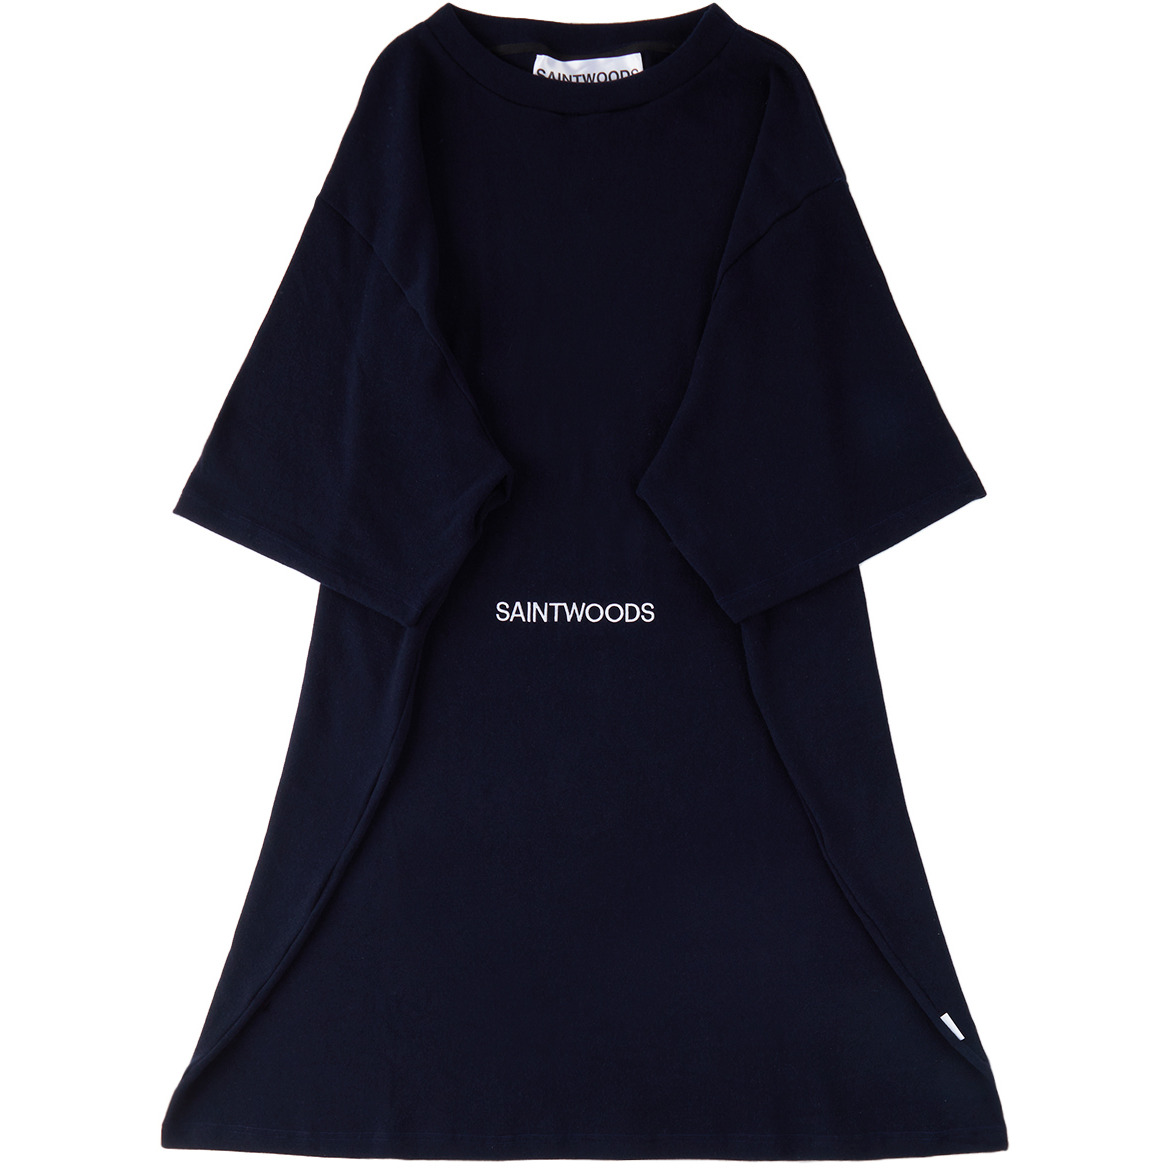 Saintwoods SSENSE Exclusive Navy Wool & Cashmere Oversize T-Shirt Blanket - image 1